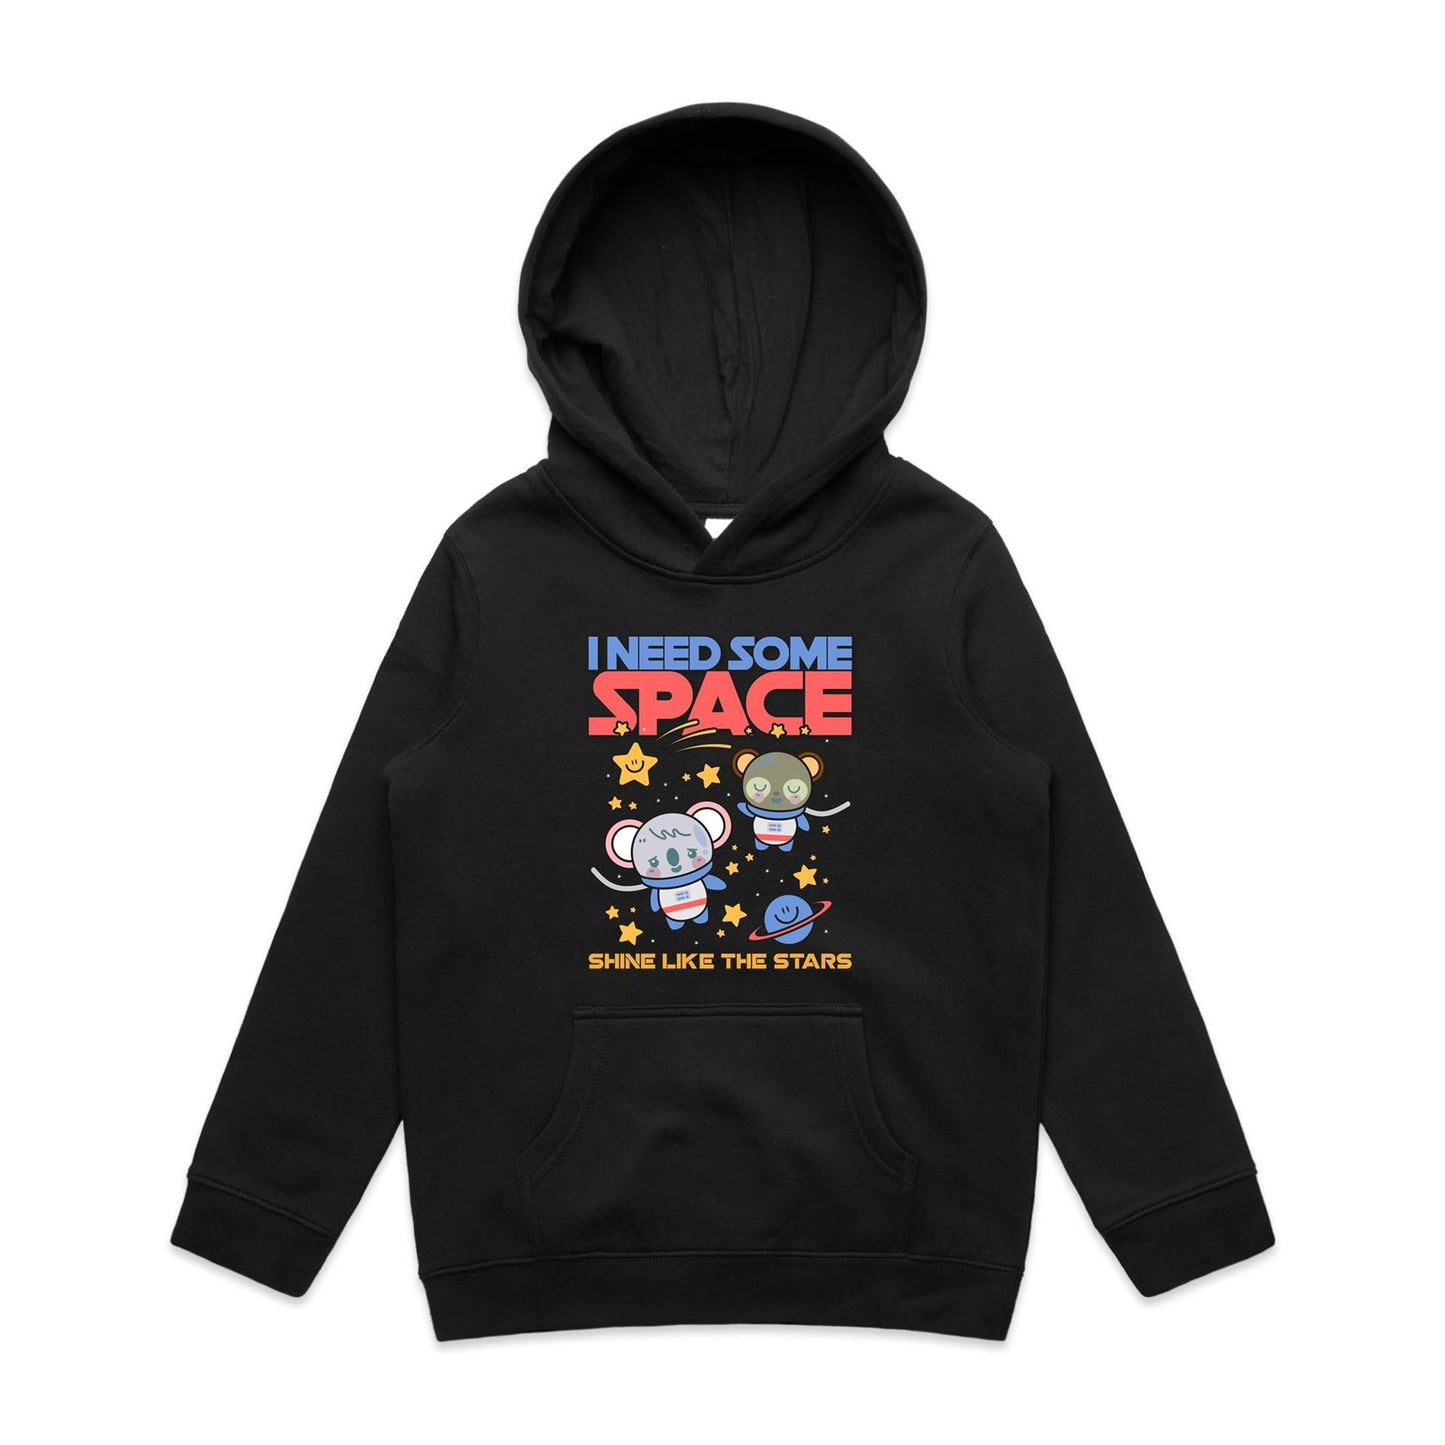 I Need Some Space - Youth Supply Hood Black Kids Hoodie Space